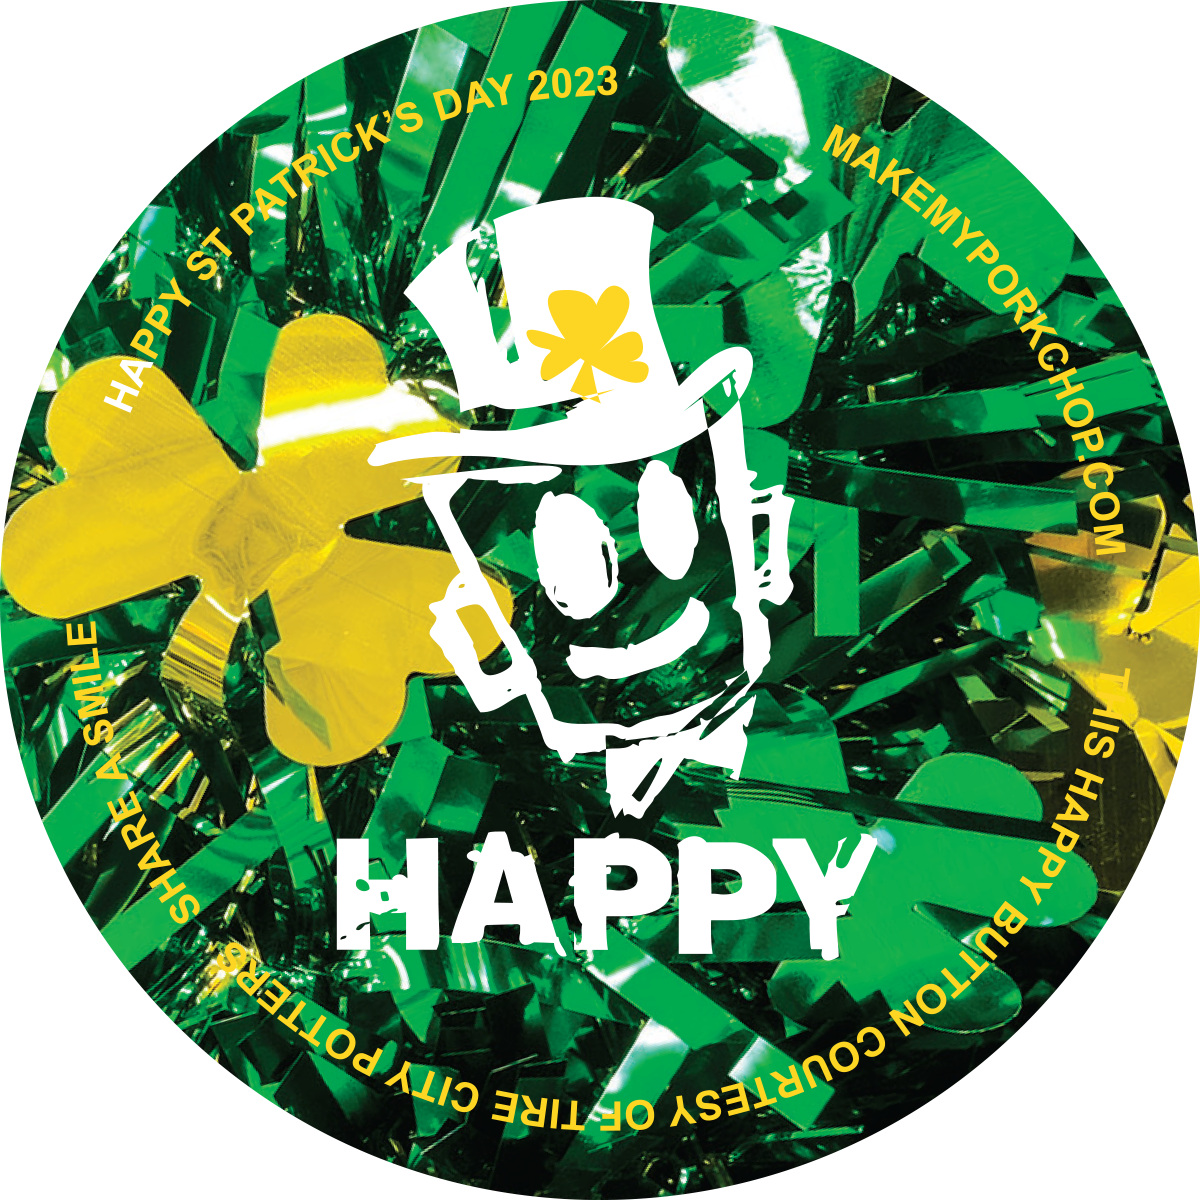 HAPPY — St. Patricks Day 2023